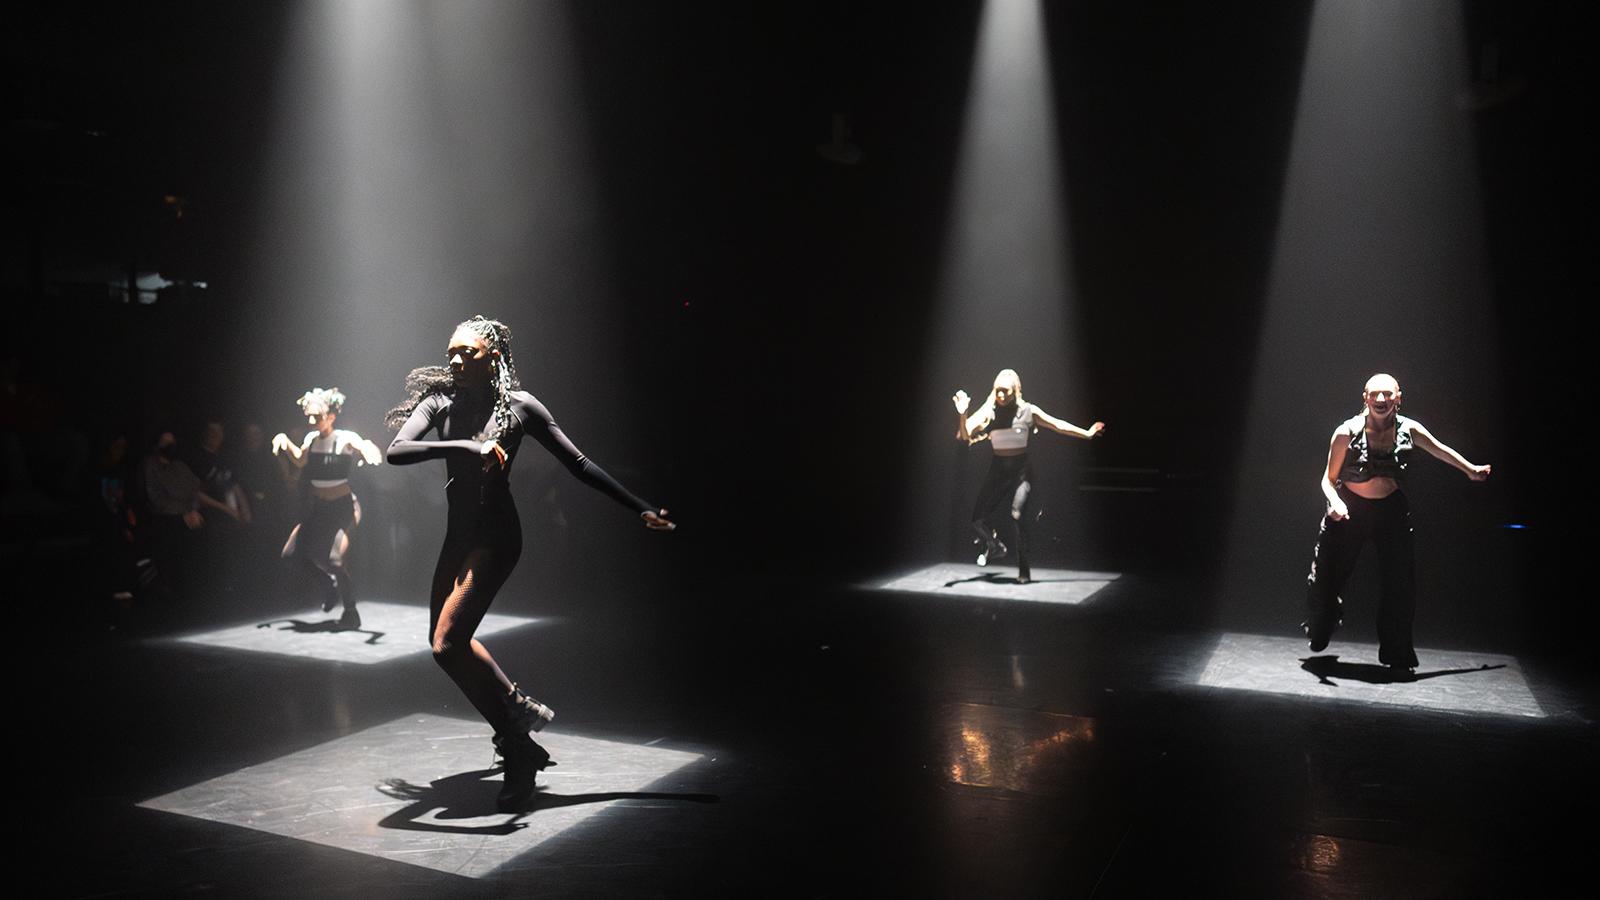 dancers wearing black on a lit stage